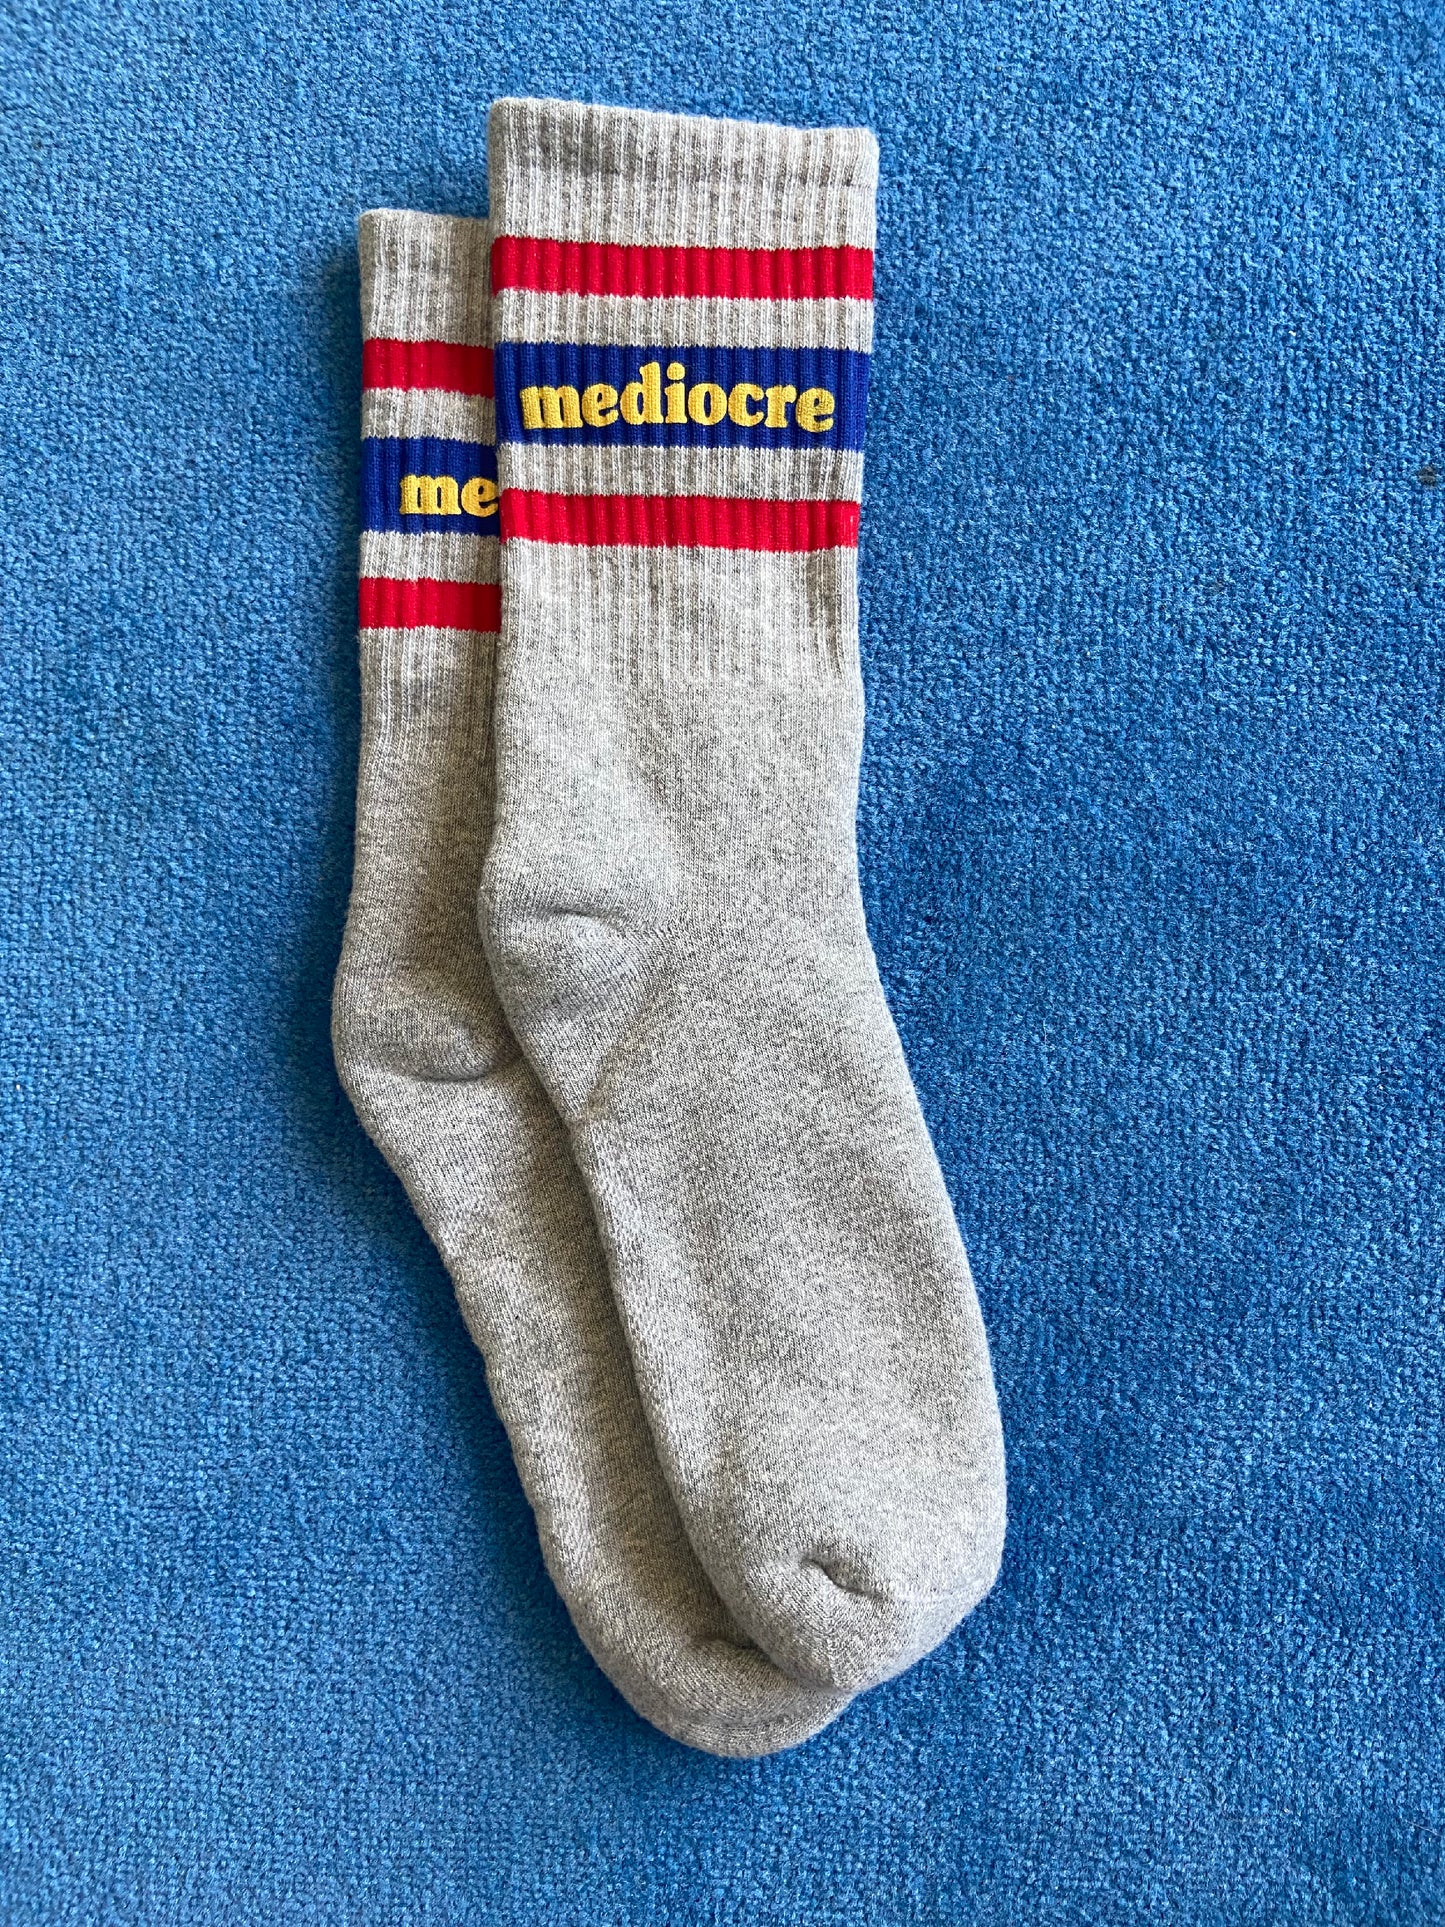 Mediocre Socks